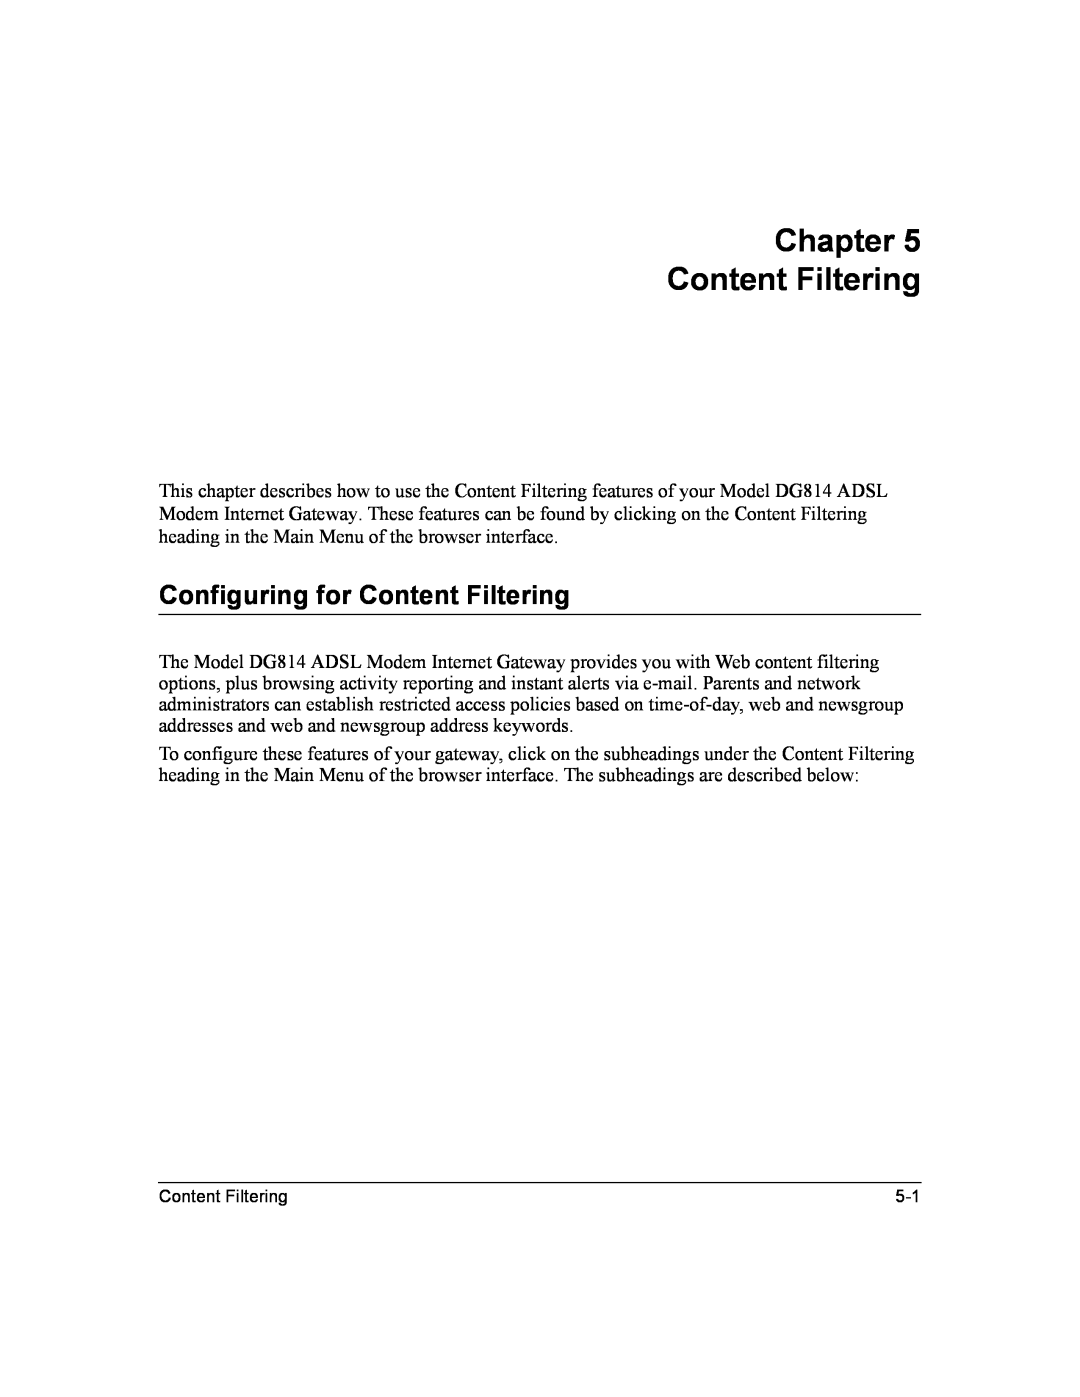 NETGEAR DG814 DSL manual Chapter Content Filtering, Configuring for Content Filtering 